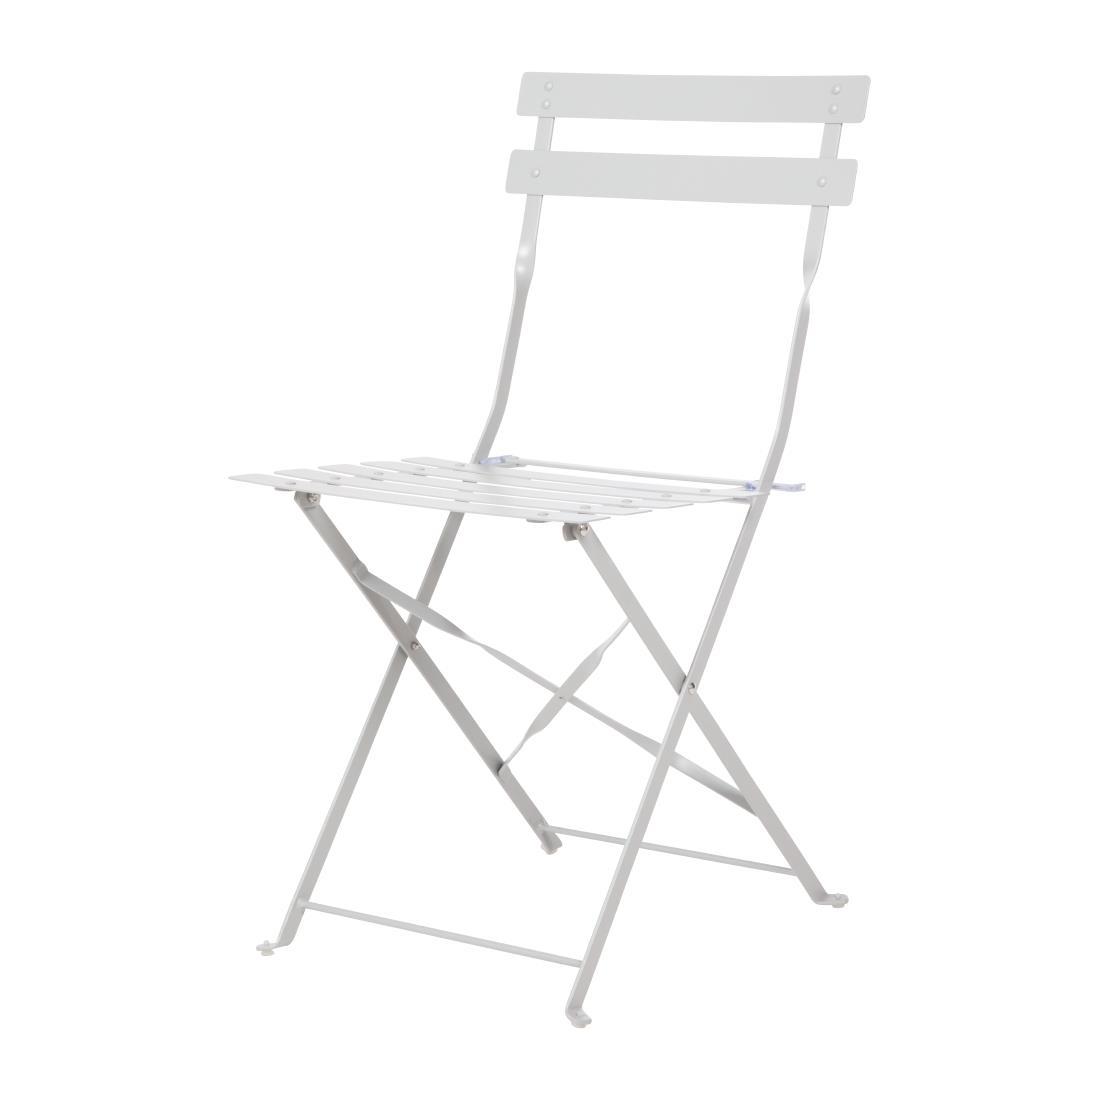 Bolero Steel Pavement StyleFolding Chairs Grey (Pack of 2) - GH551  - 2